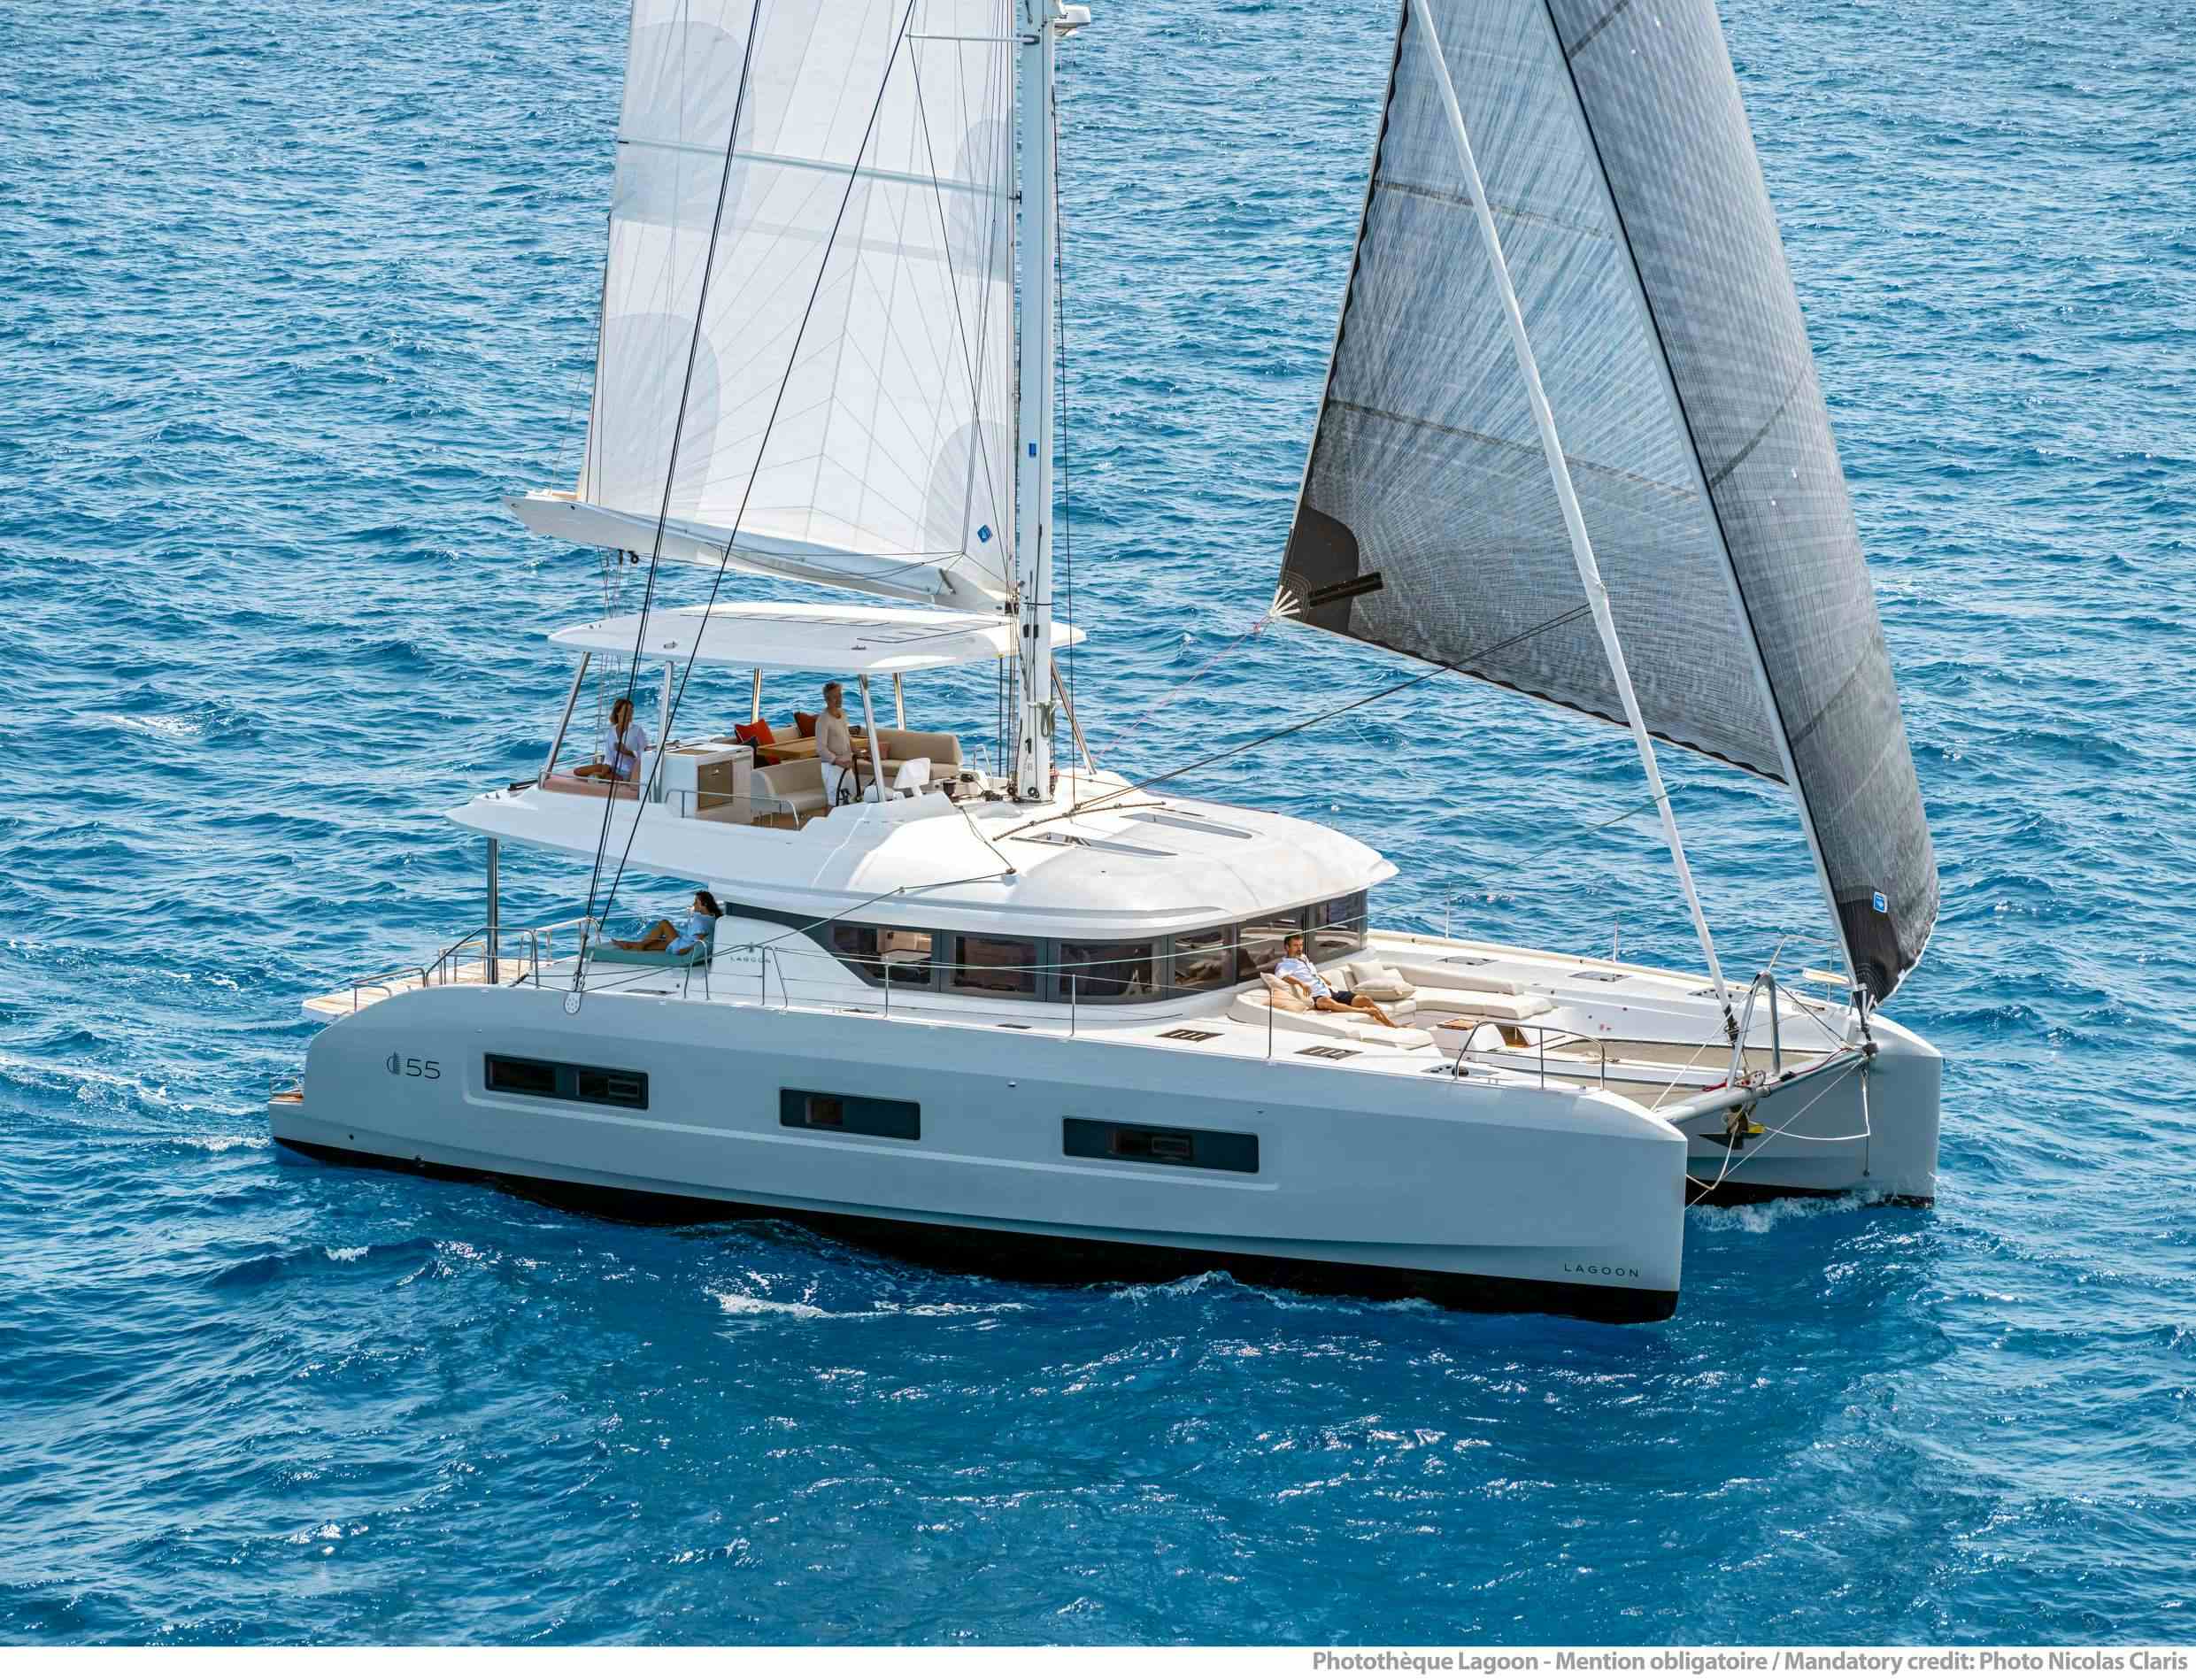 VALIUM 55 - Yacht Charter Skiathos & Boat hire in Greece 1